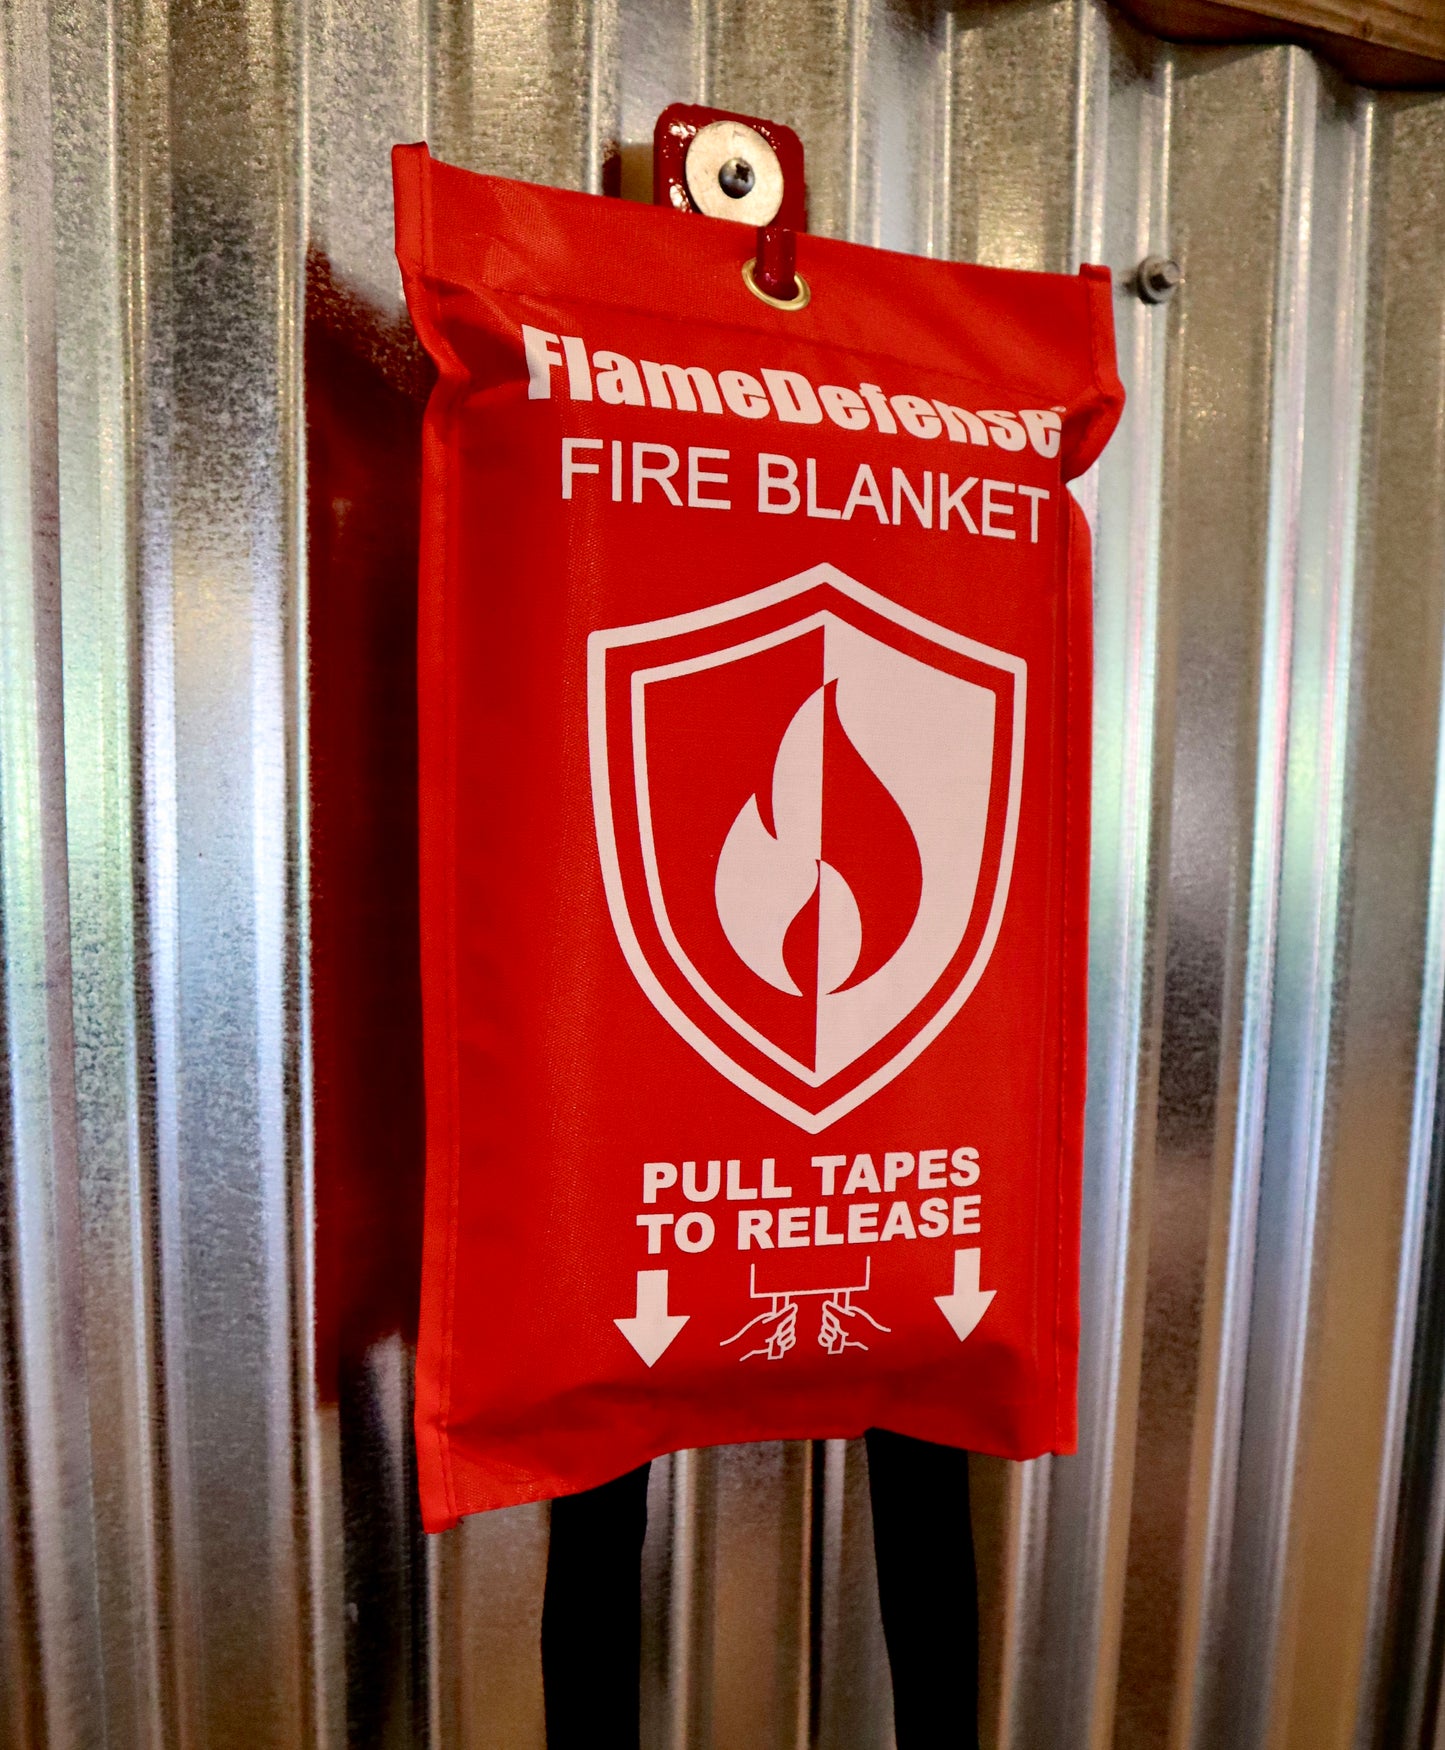 FIRE BLANKET - FLAME DEFENSE®